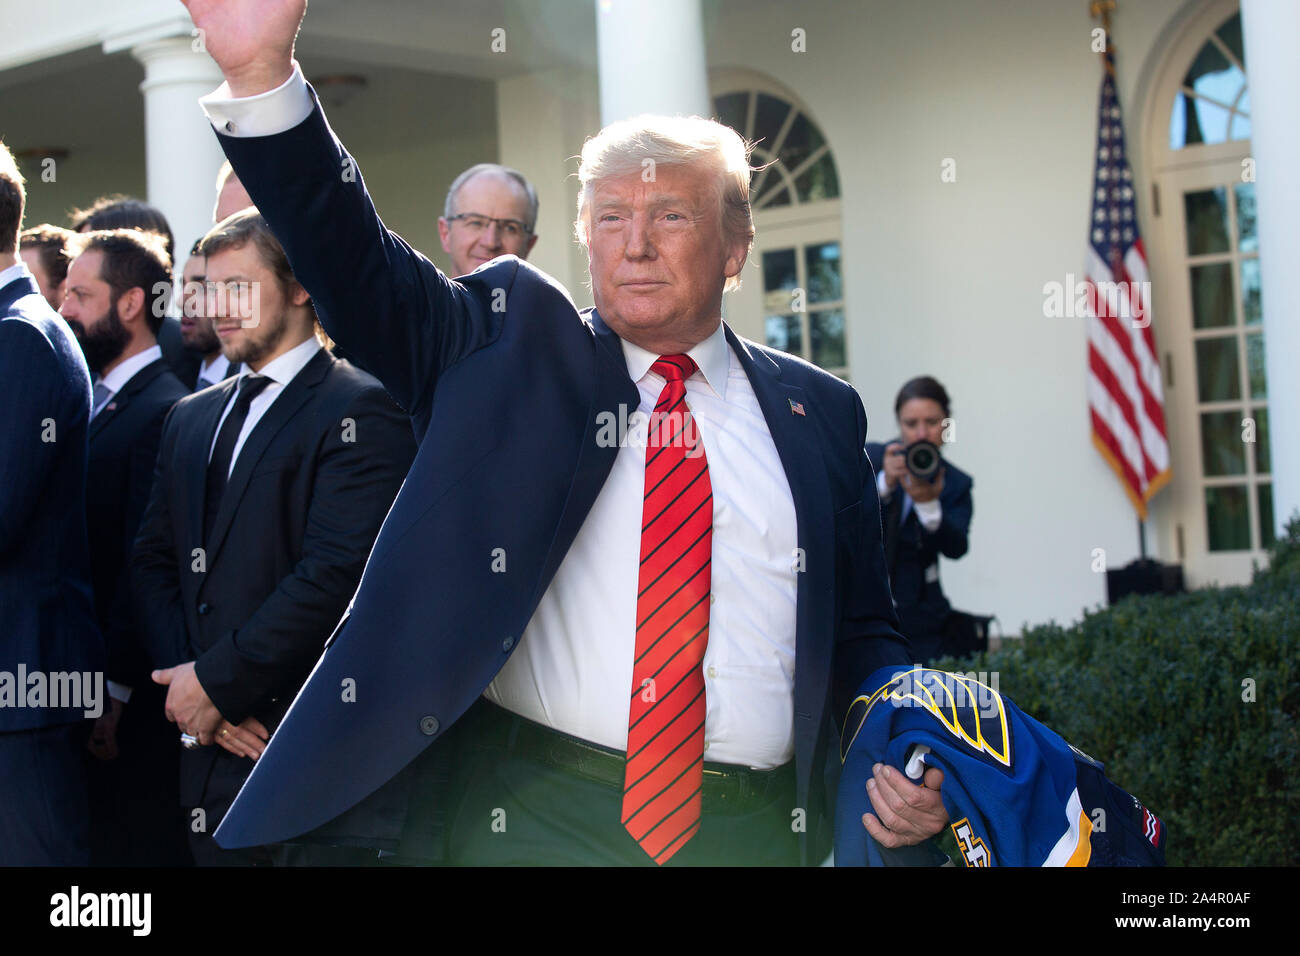 St. Louis Blues visit Trump White House as full team - Washington Times